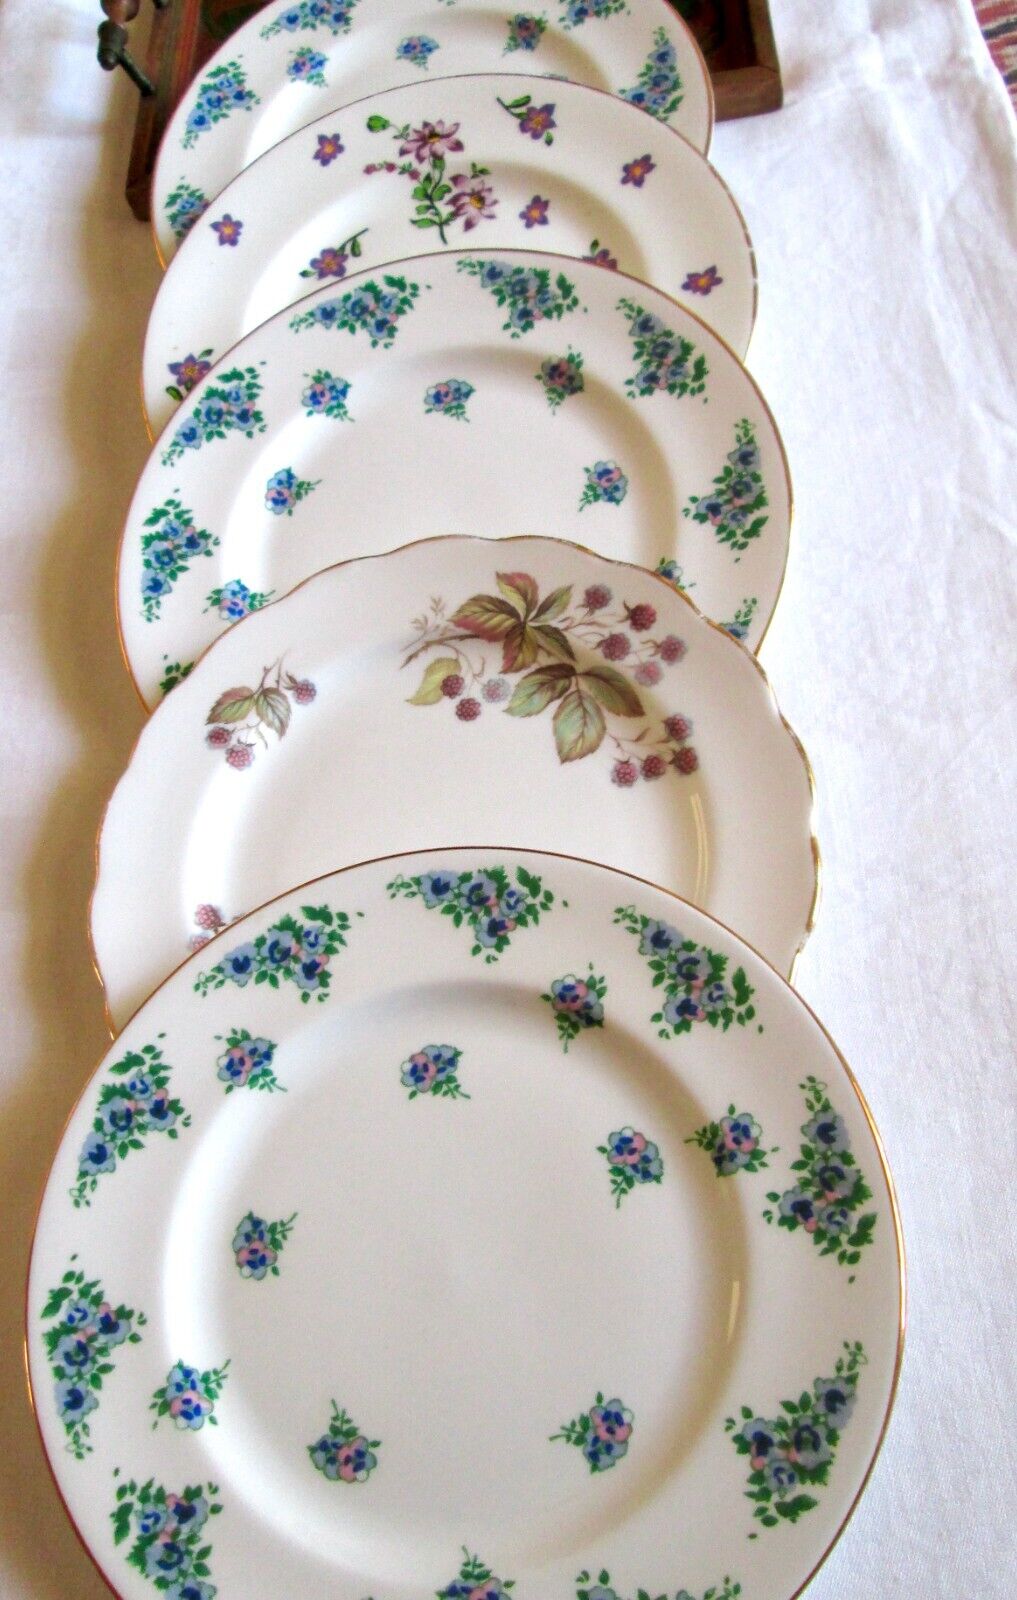 Mismatched Plates from England,Vintage Porcelain Plates